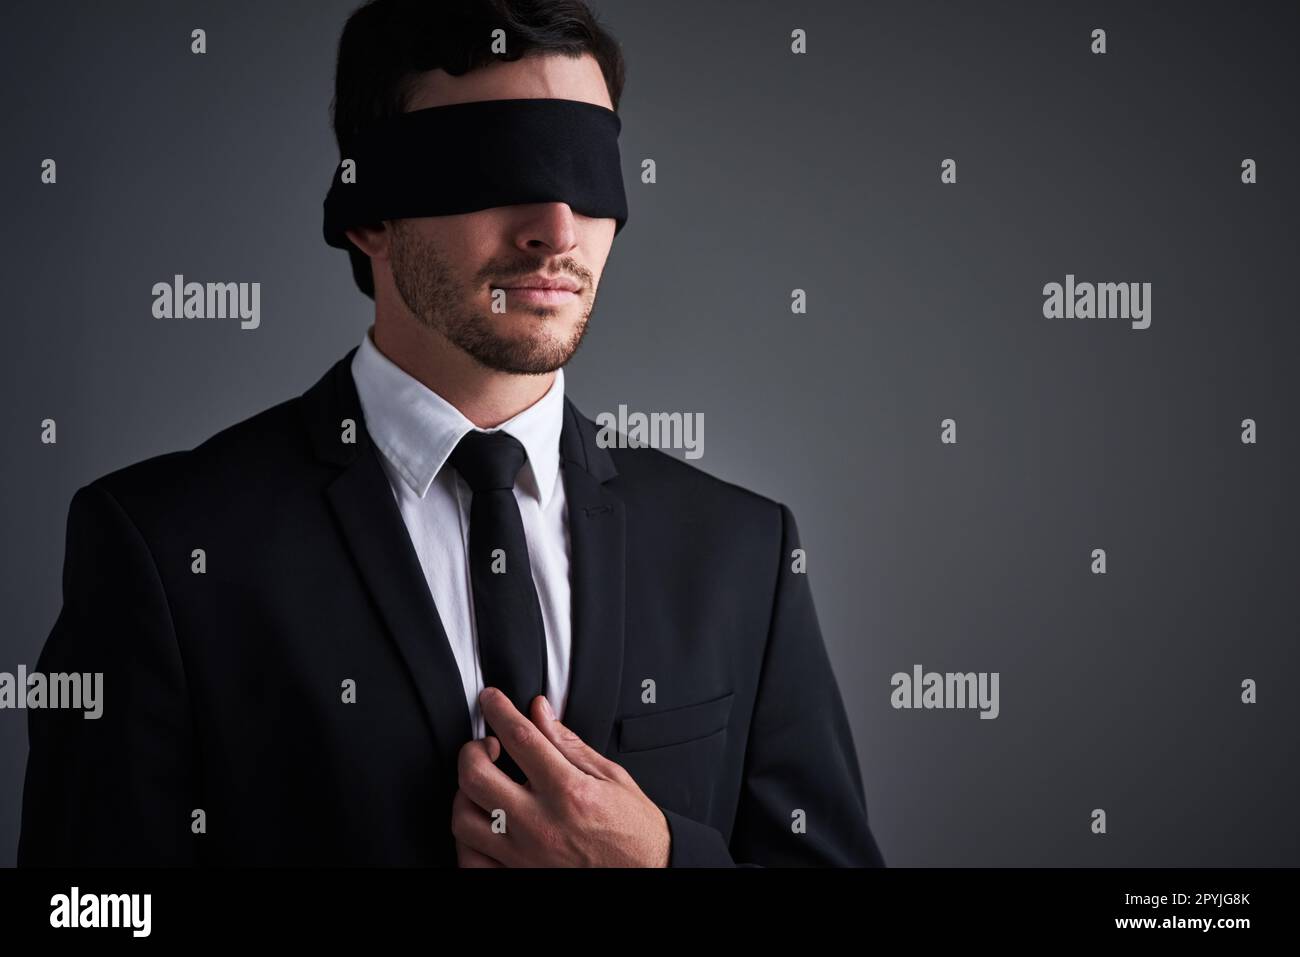 Blindfolded elegant man Stock Photo by ©brasoveanub 44815667